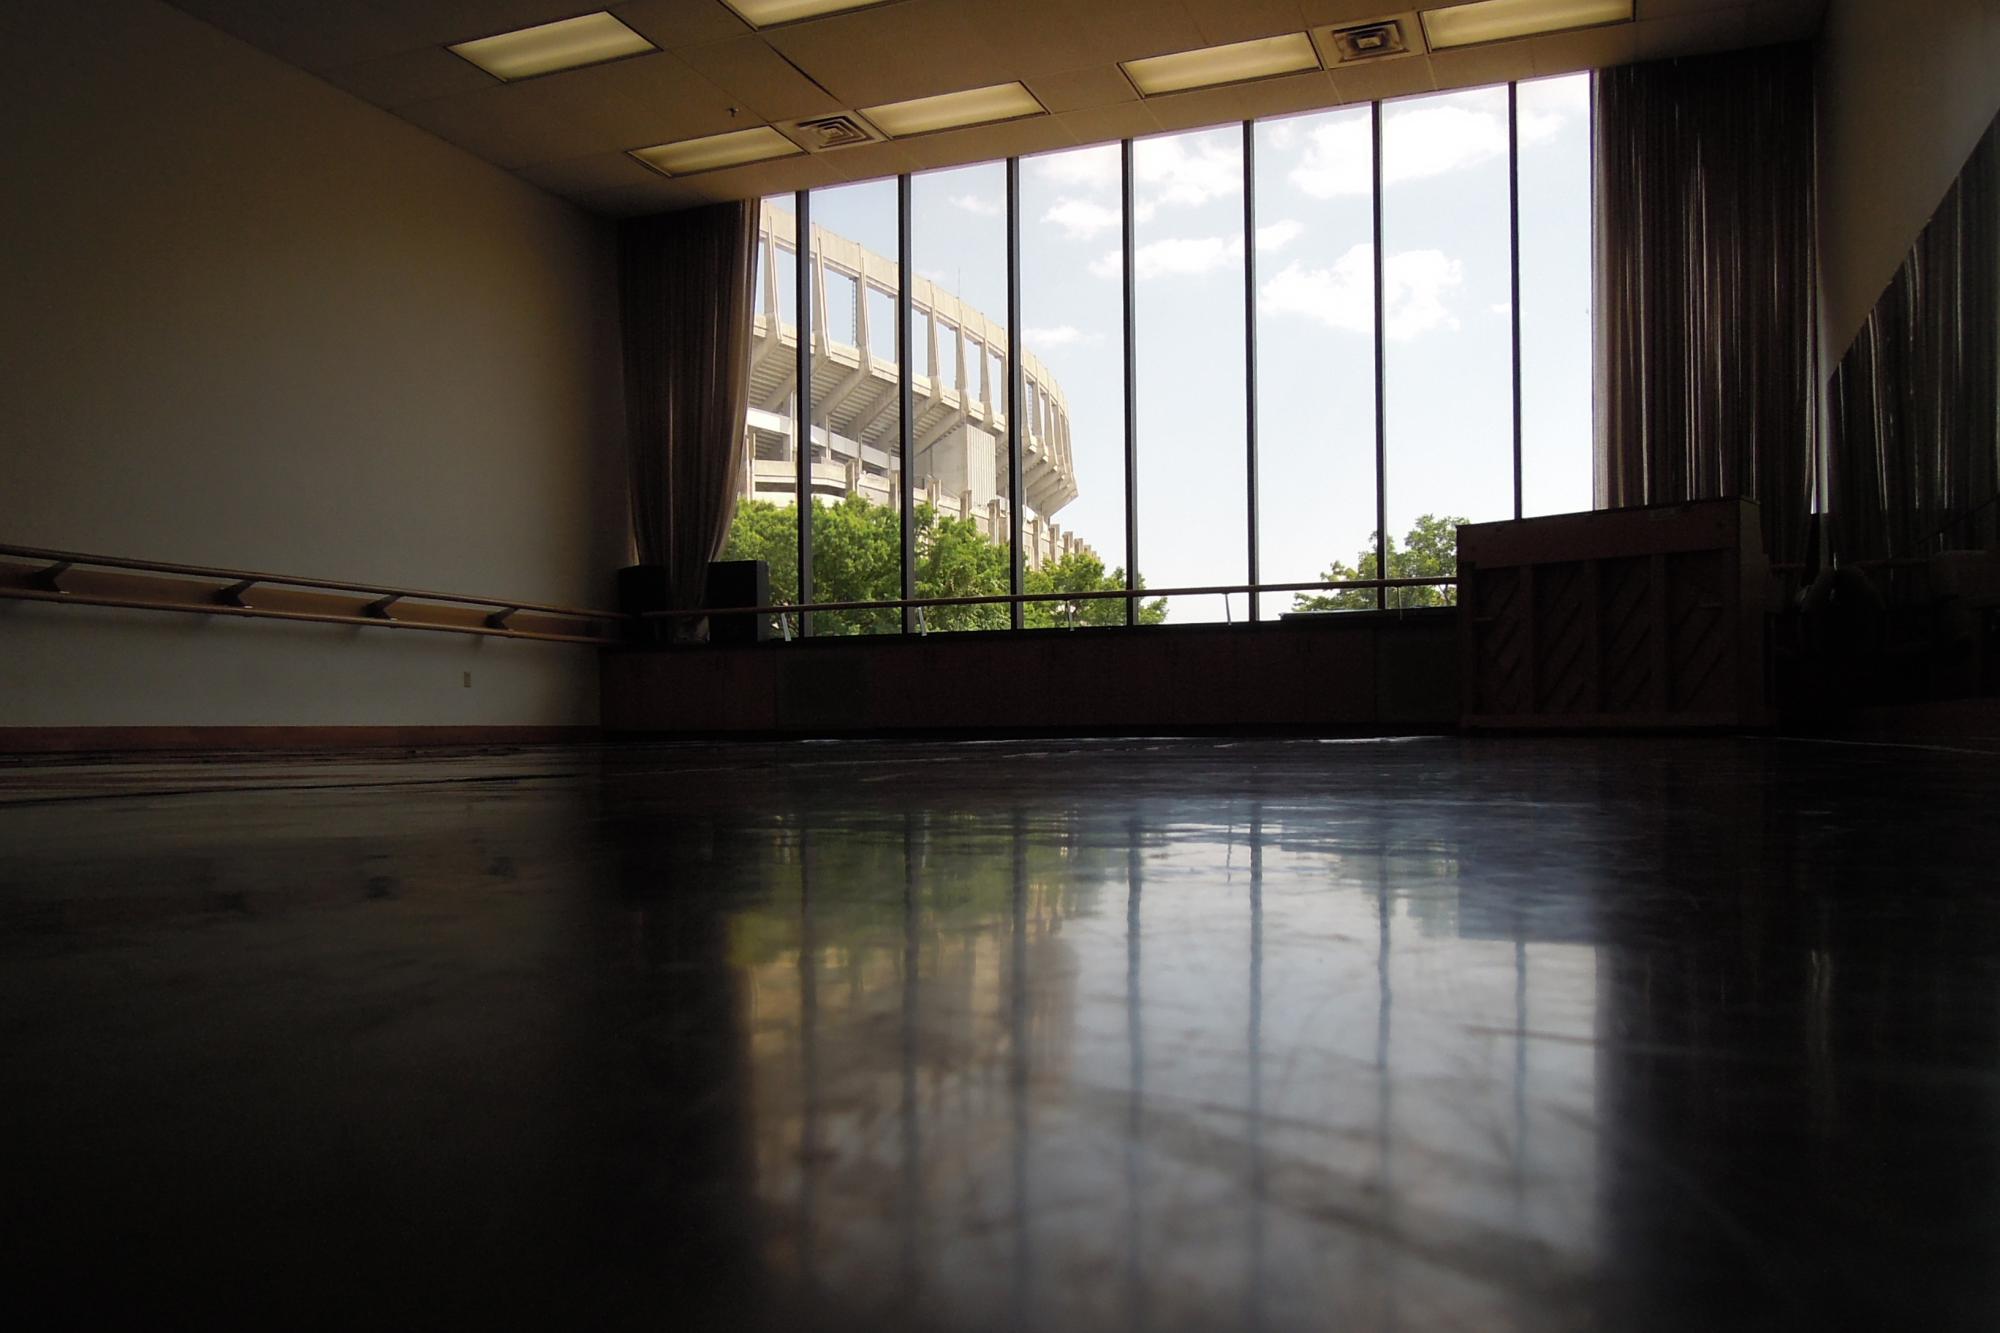 dance studio with large windows facing the UT football stadium